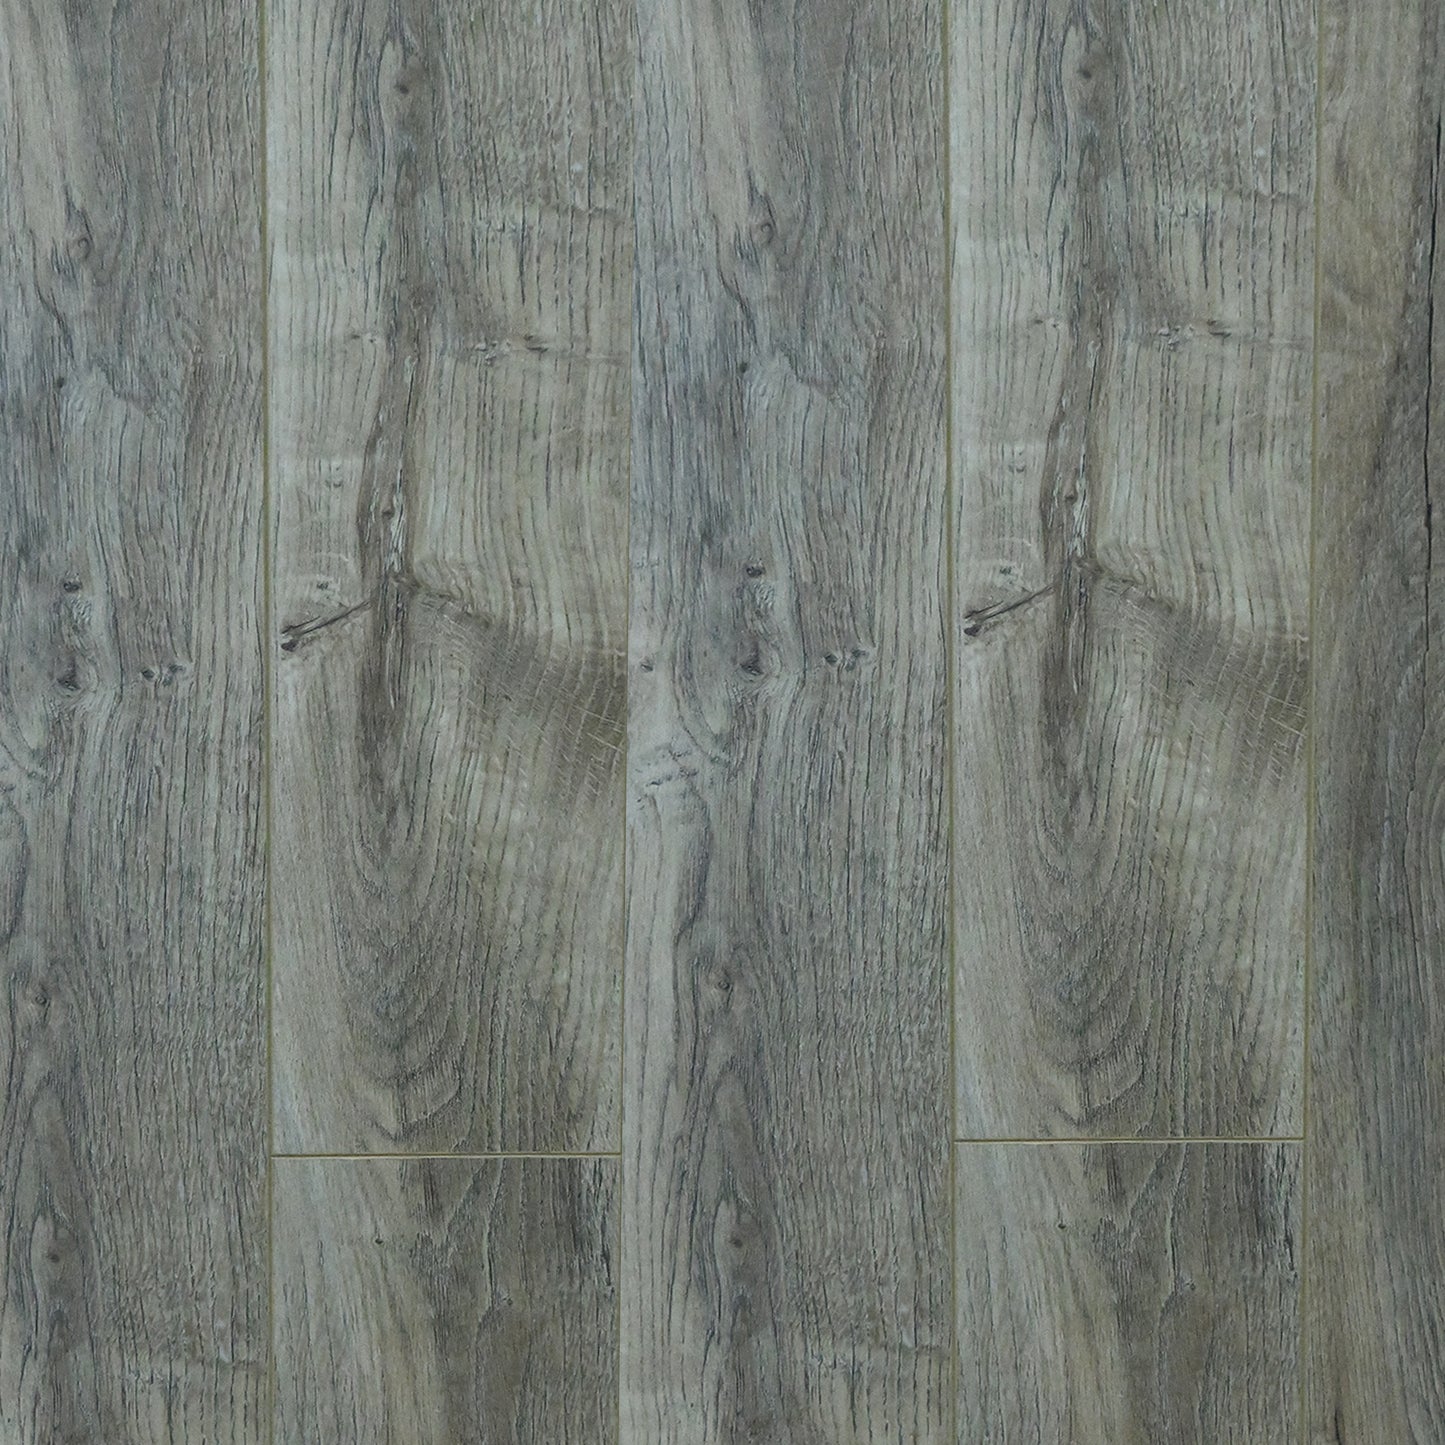 Lumber Laminate Flooring by KLD Home